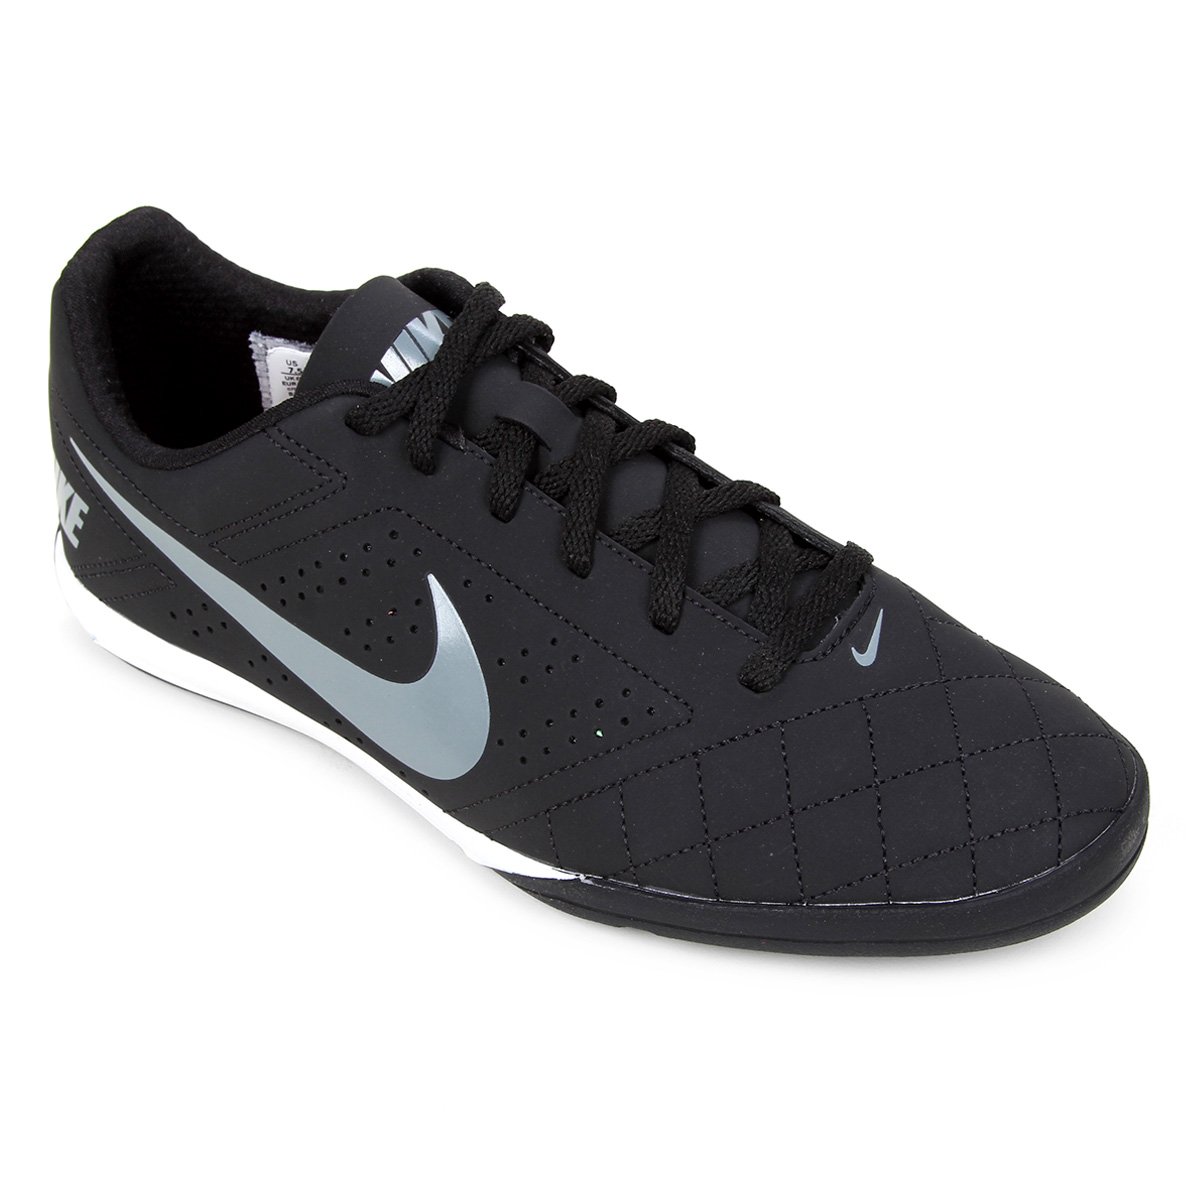 Chuteira Nike Beco 2 IC – Preto/Cinza/Branco